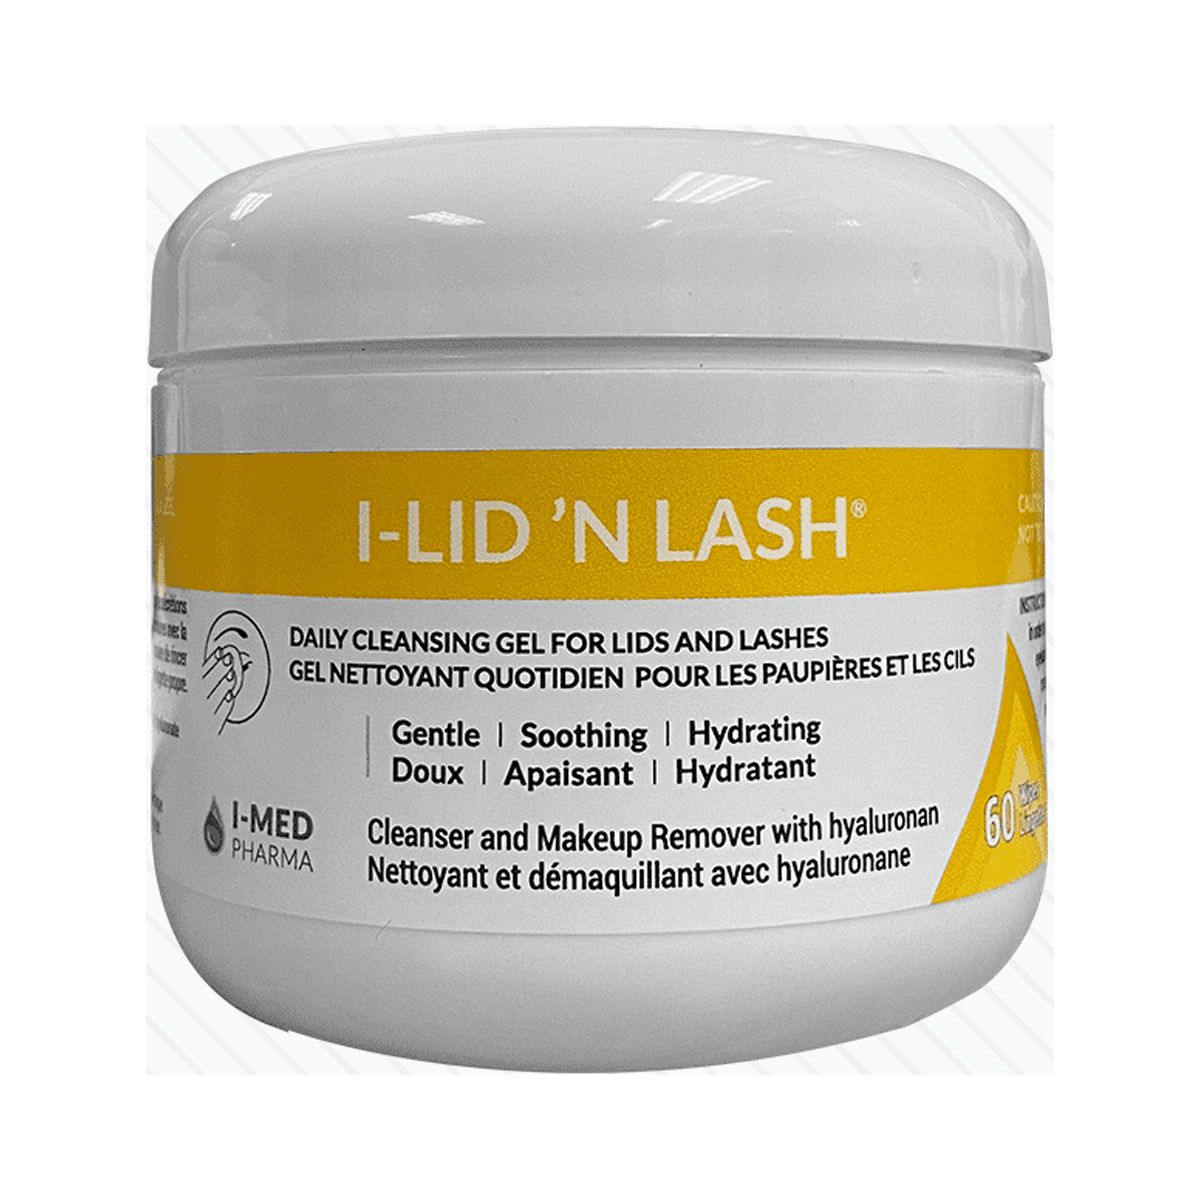 I-Med Pharma I-Lid 'N Lash | Daily Cleansing Gel for Lids and Lashes (60 Wipes) (I-Lid 'N Lash) - image 1 of 3